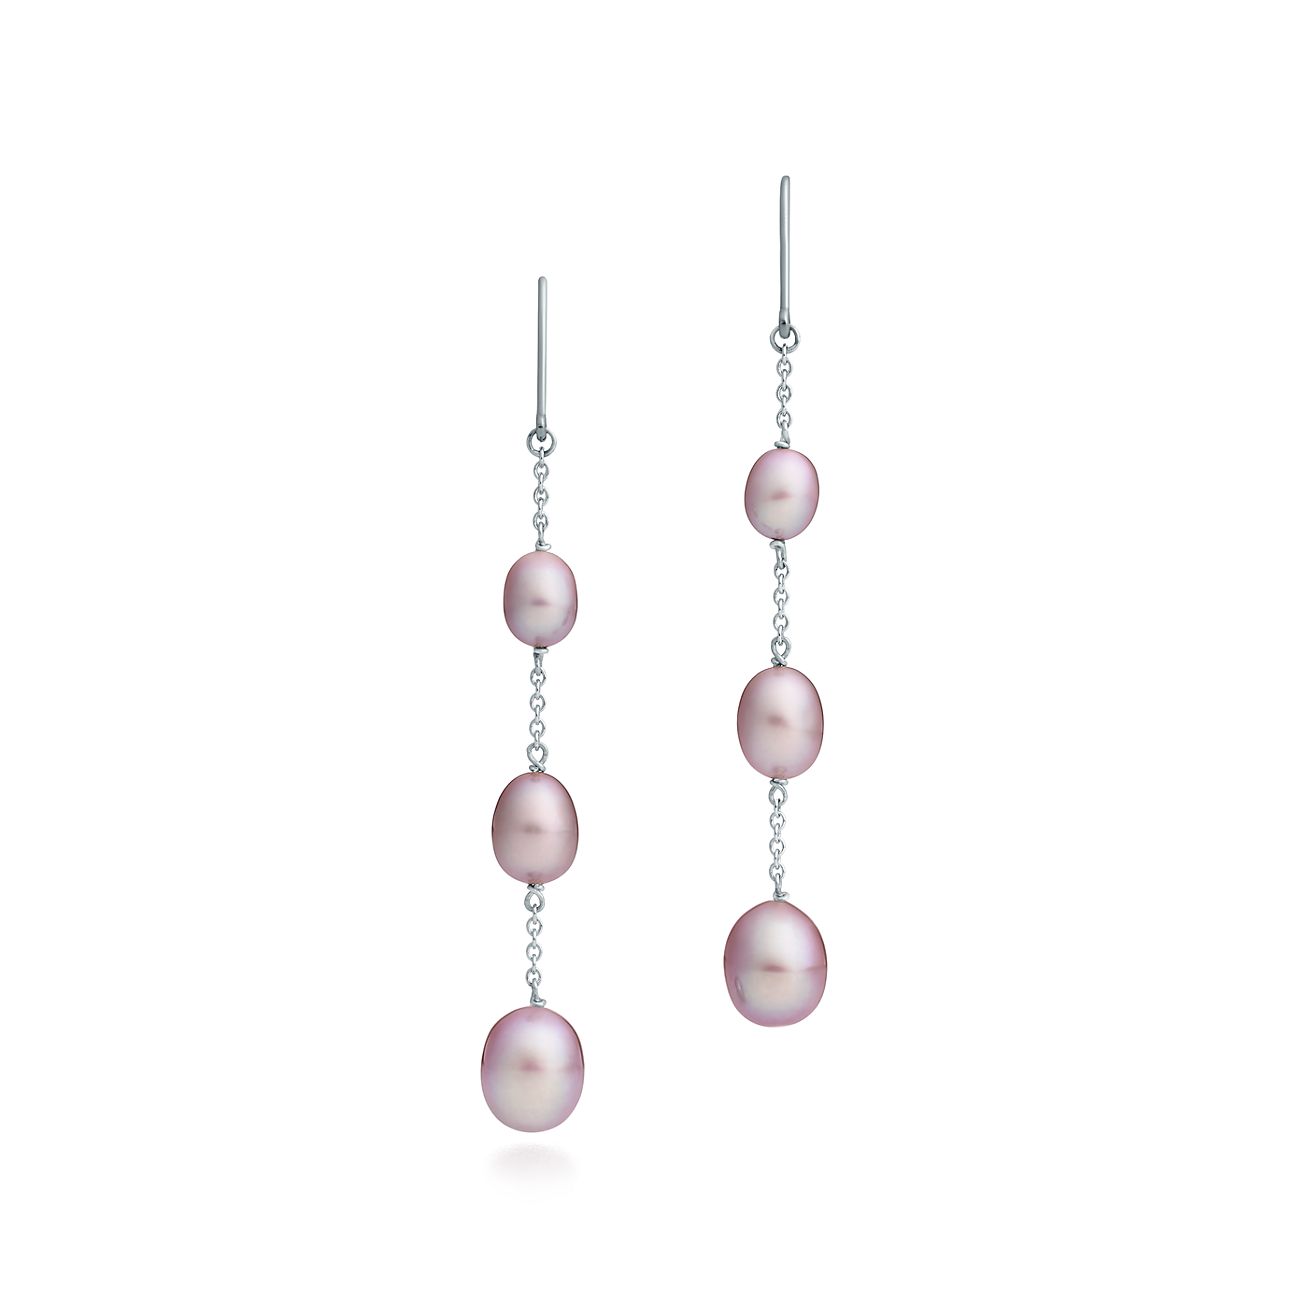 tiffany elsa peretti pearls by the yard drop earrings